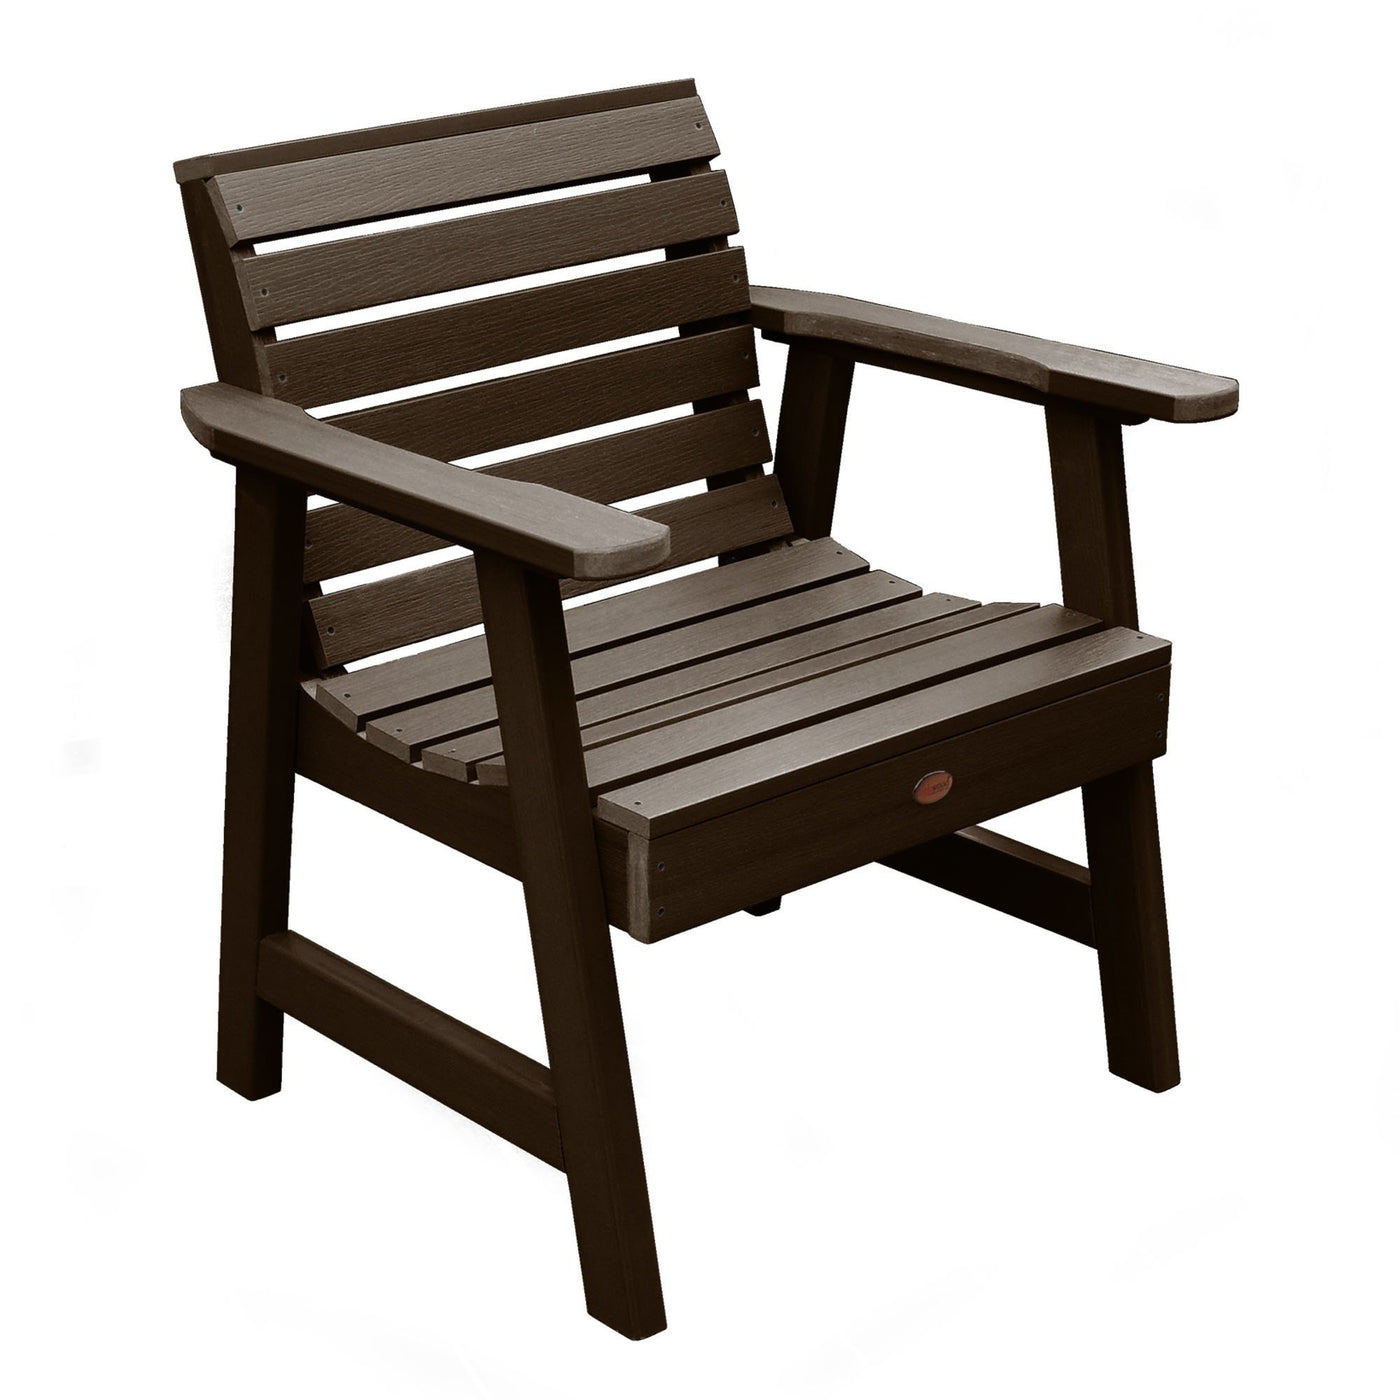 Weatherly Garden Chair Highwood USA Weathered Acorn 